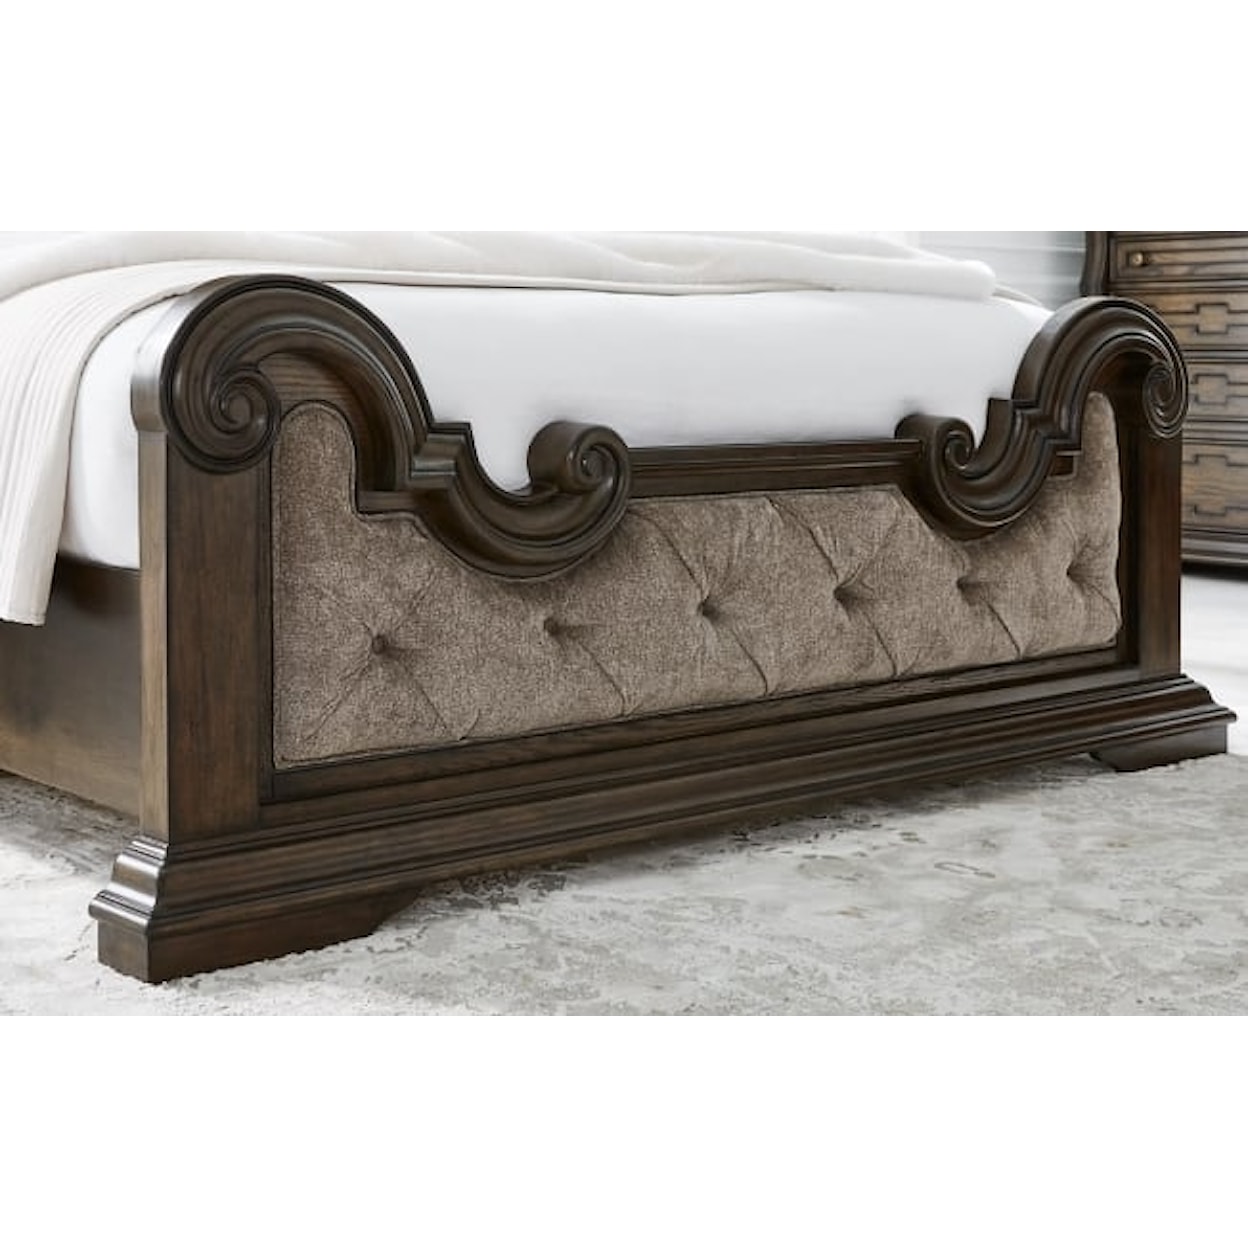 Ashley Furniture Signature Design Maylee King Upholstered Bed